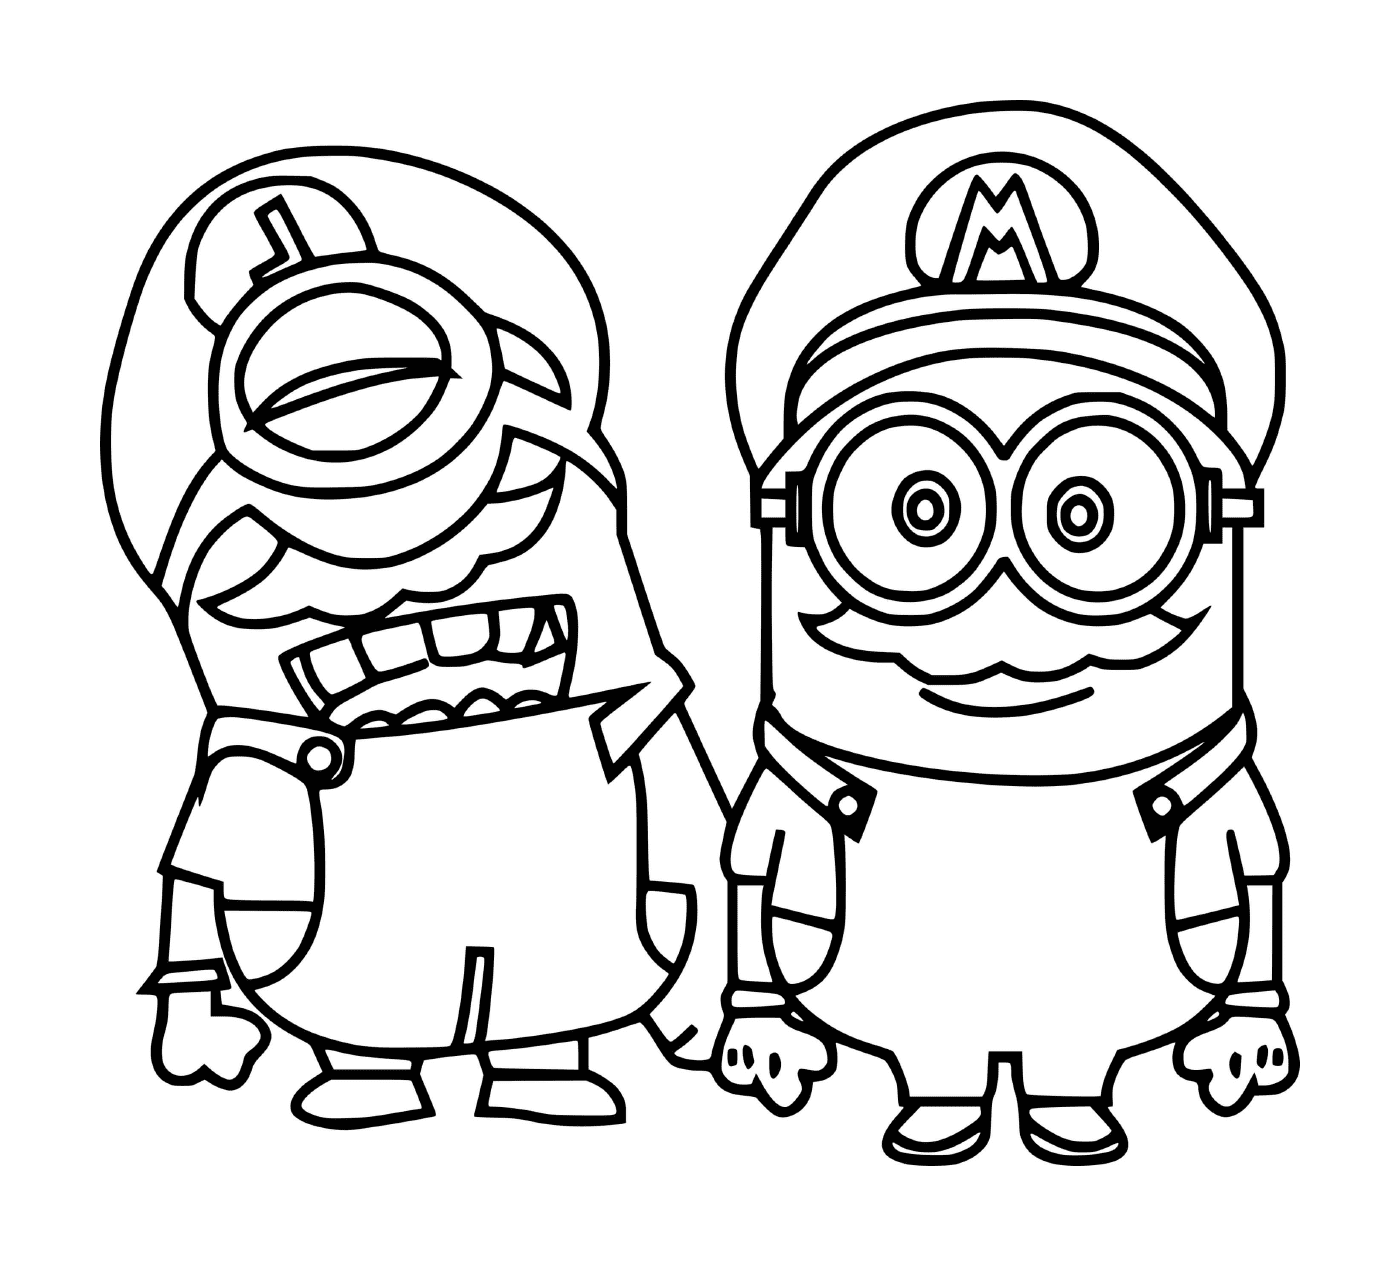  Mario Minions together 